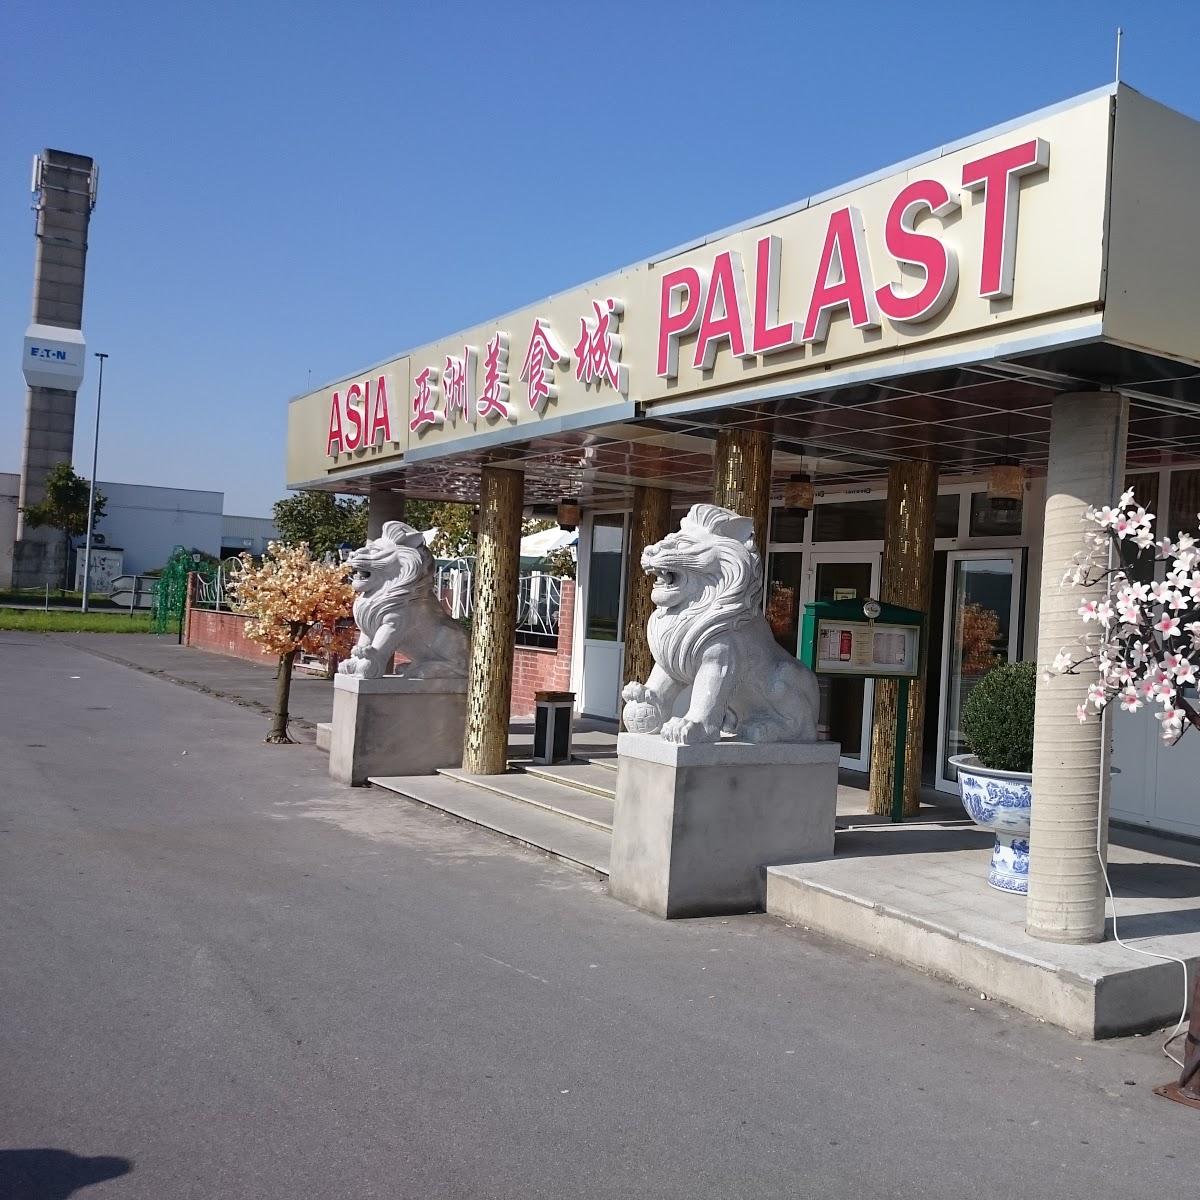 Restaurant "Asiapalast" in Soest